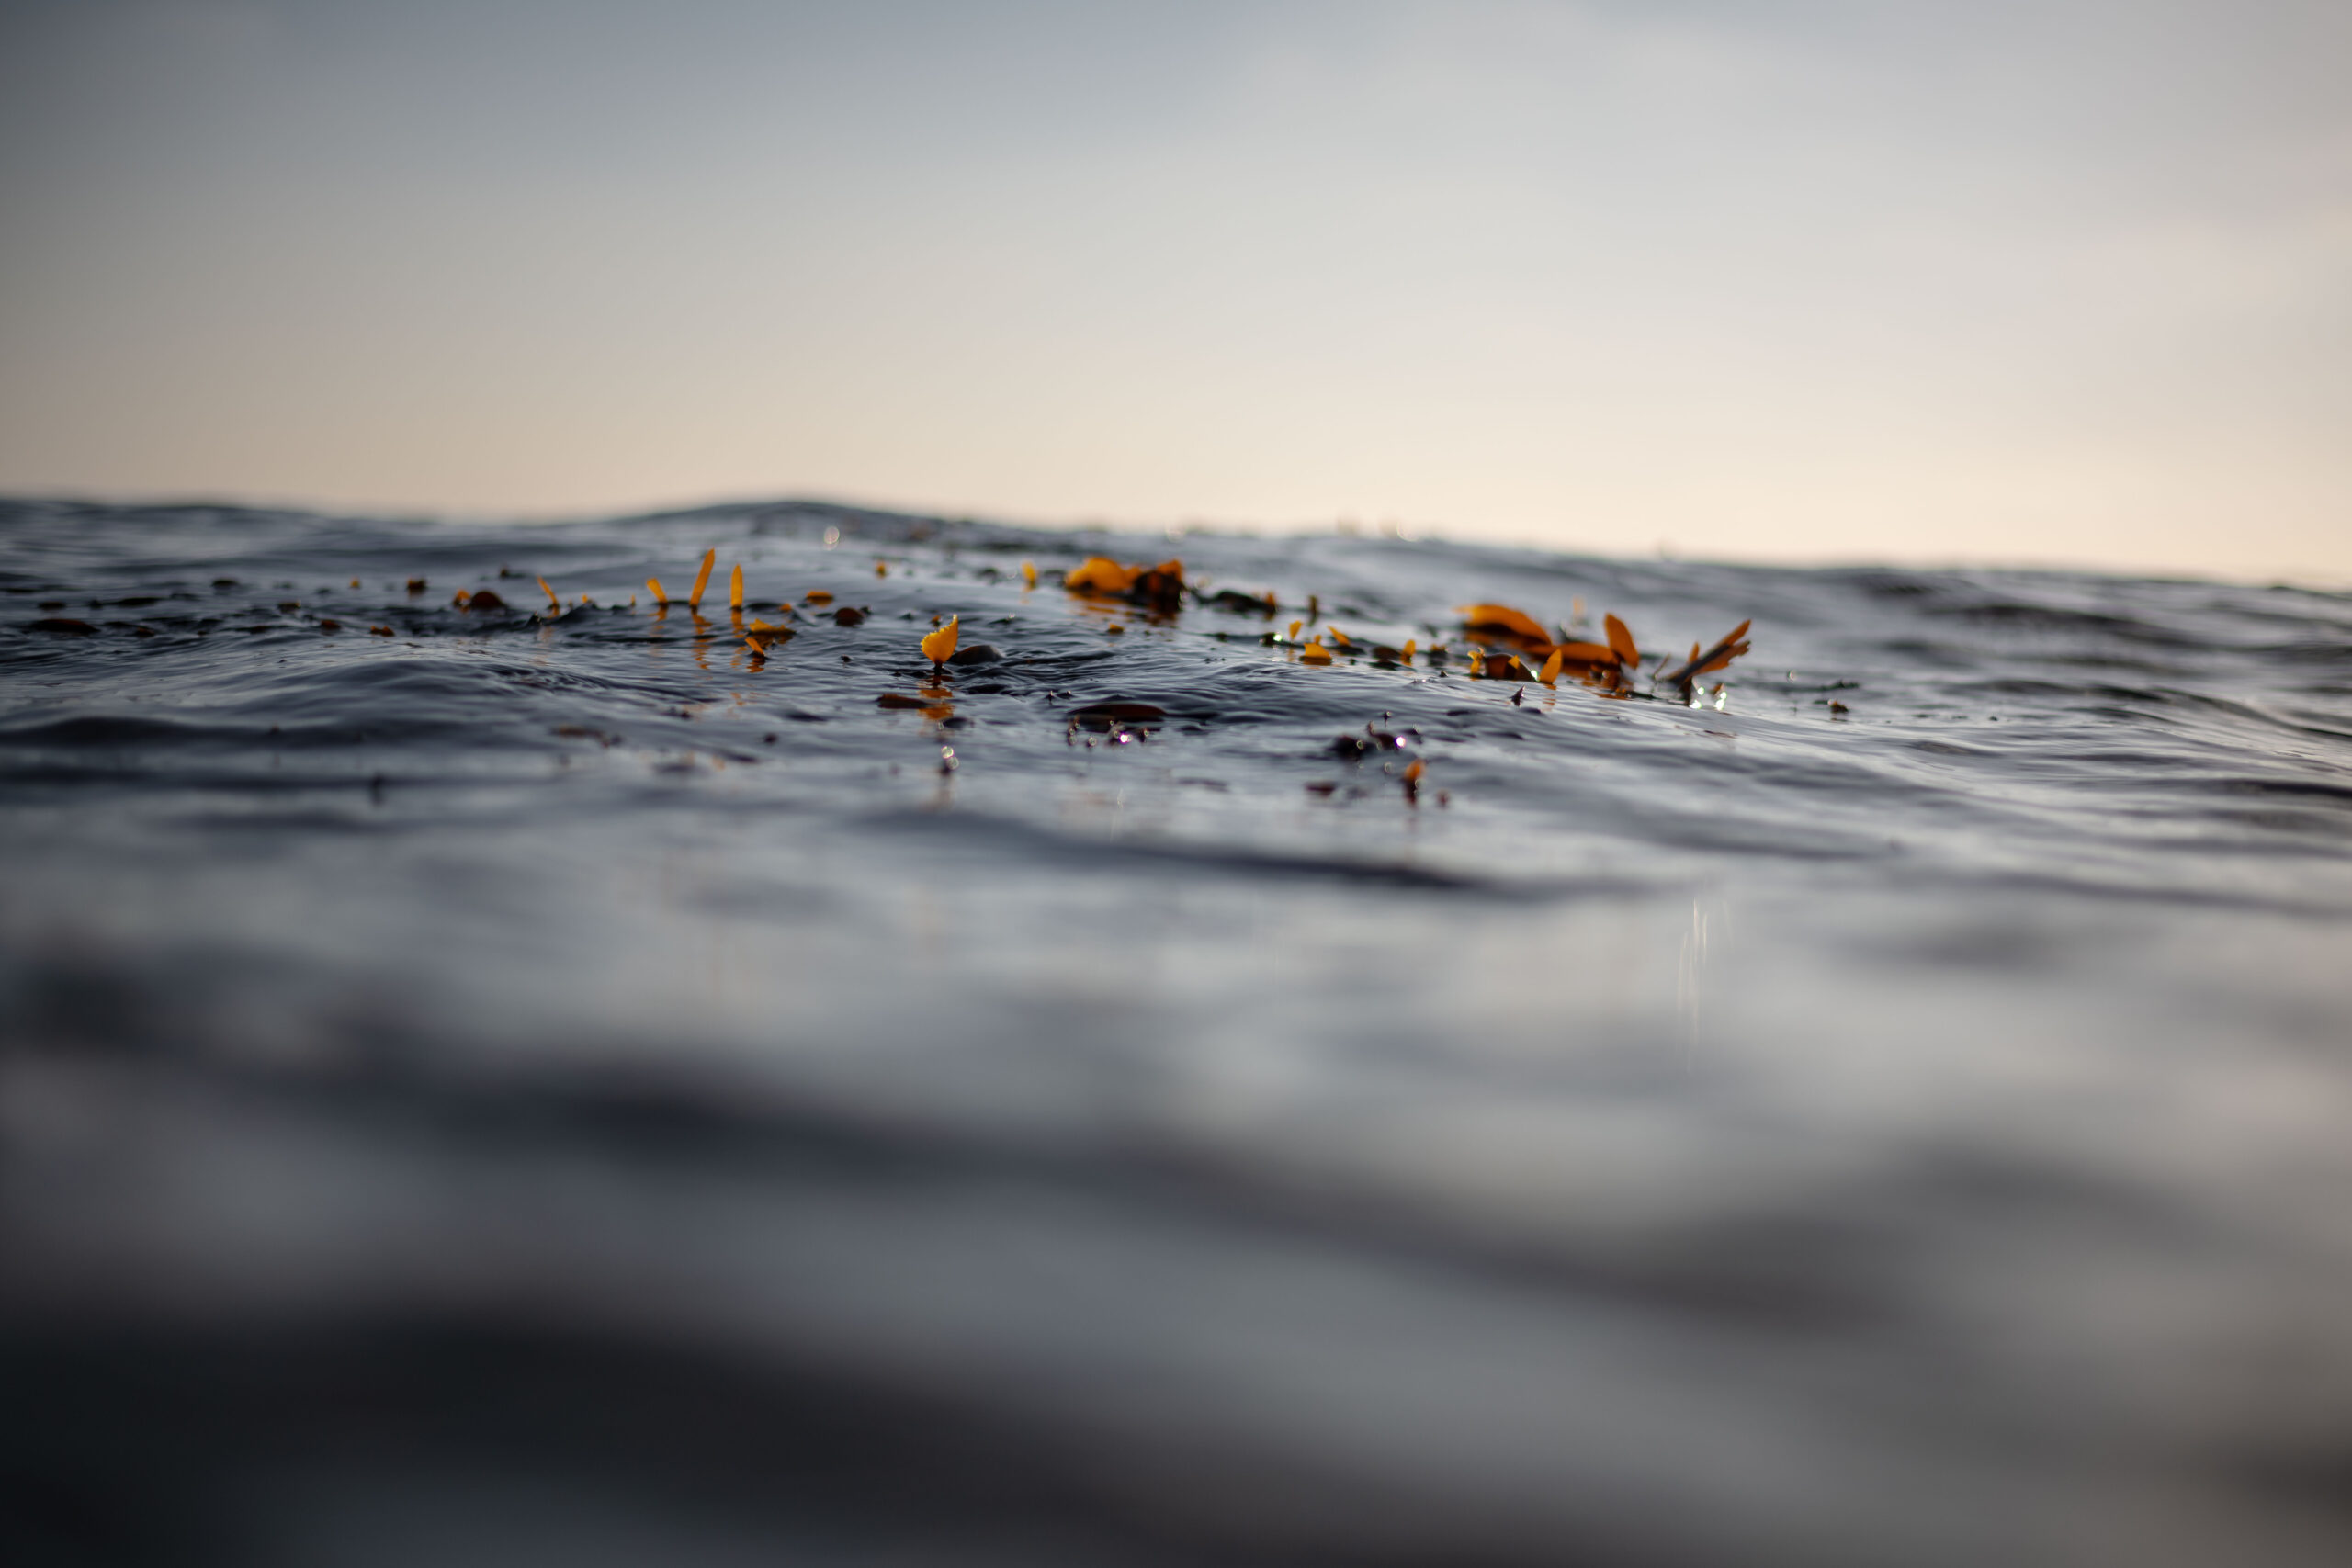 moody photo of seaweed floating in the water.